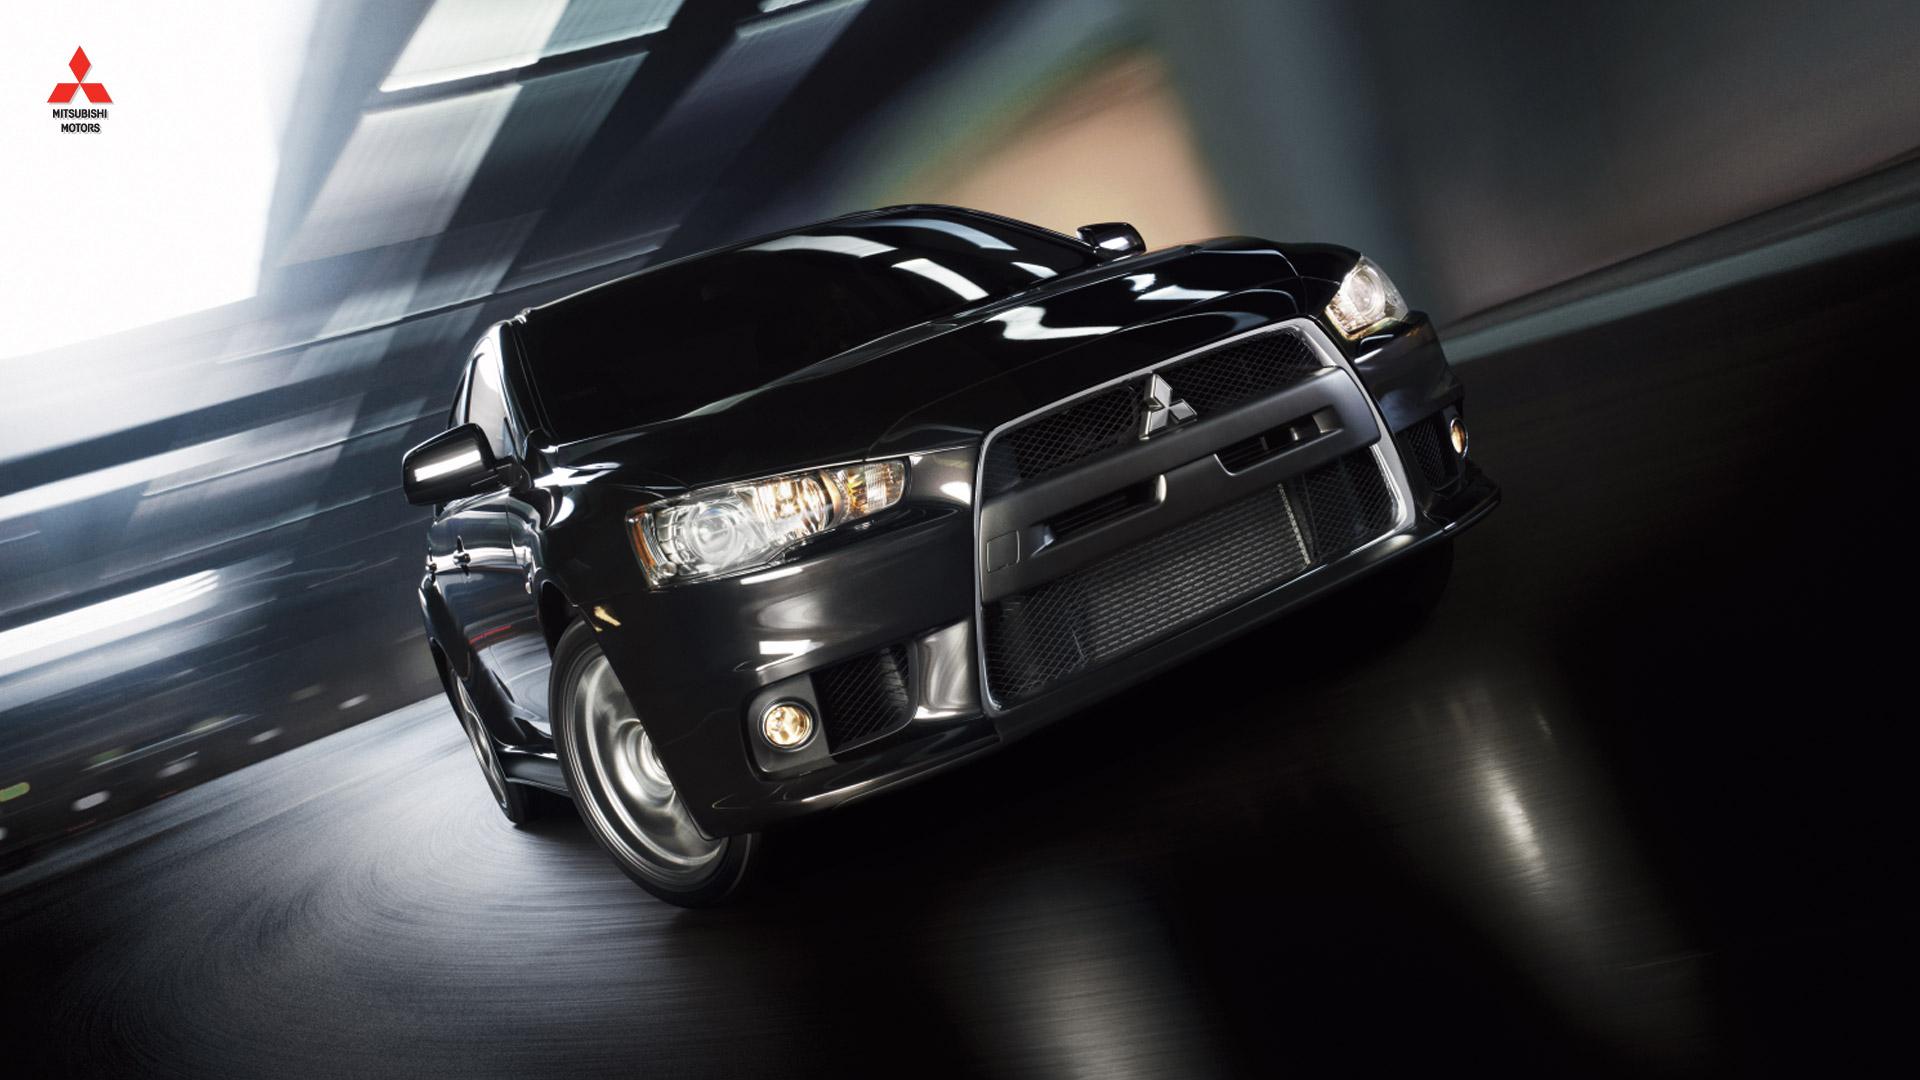 New Mitsubishi Lancer Image.com